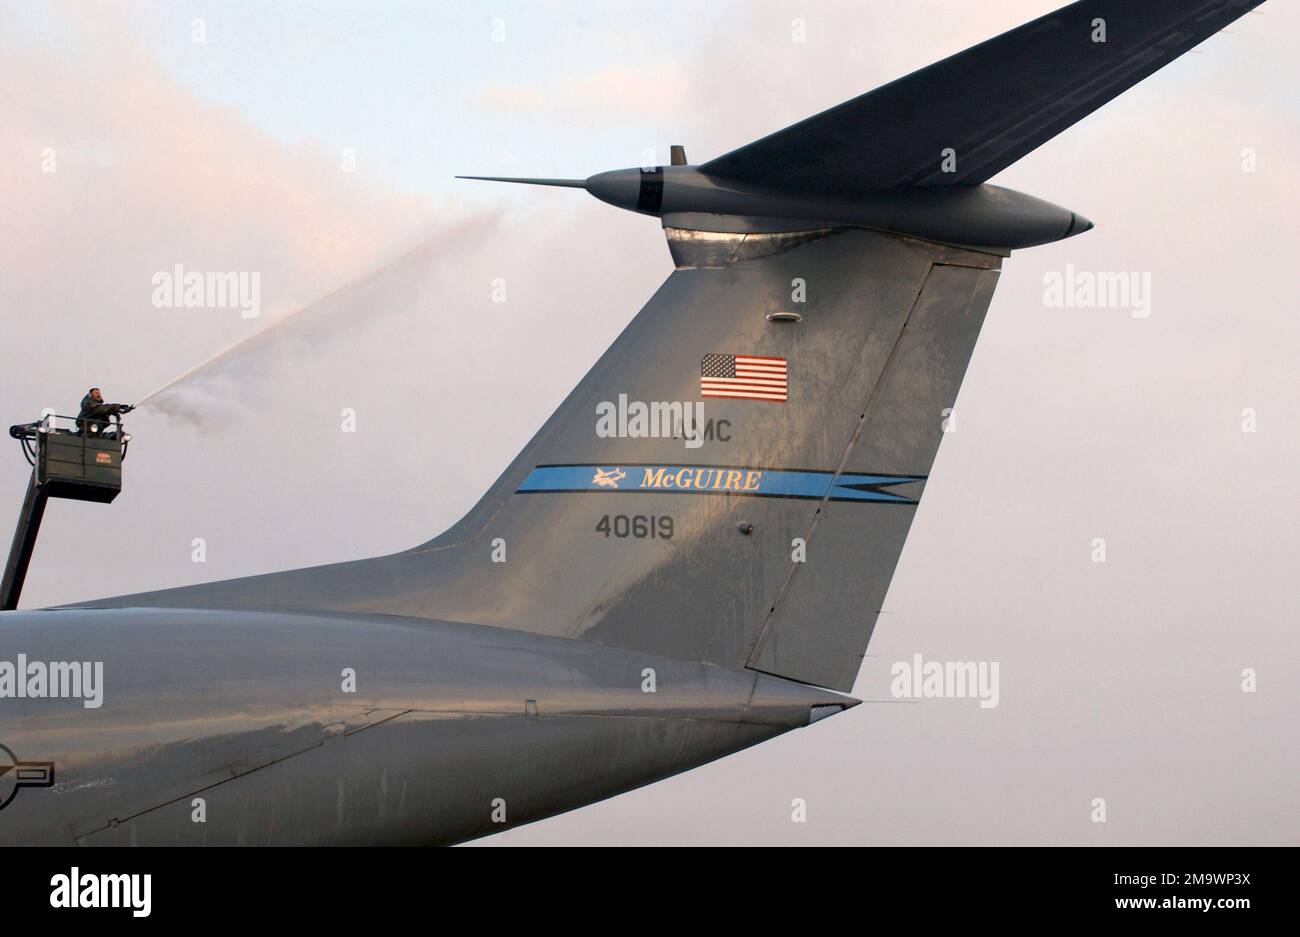 031223-F-3886C-009. Base: Rhein-Main Air Base Country: Deutschland / Germany (DEU) Scene Major Command Shown: USAFE Stock Photo